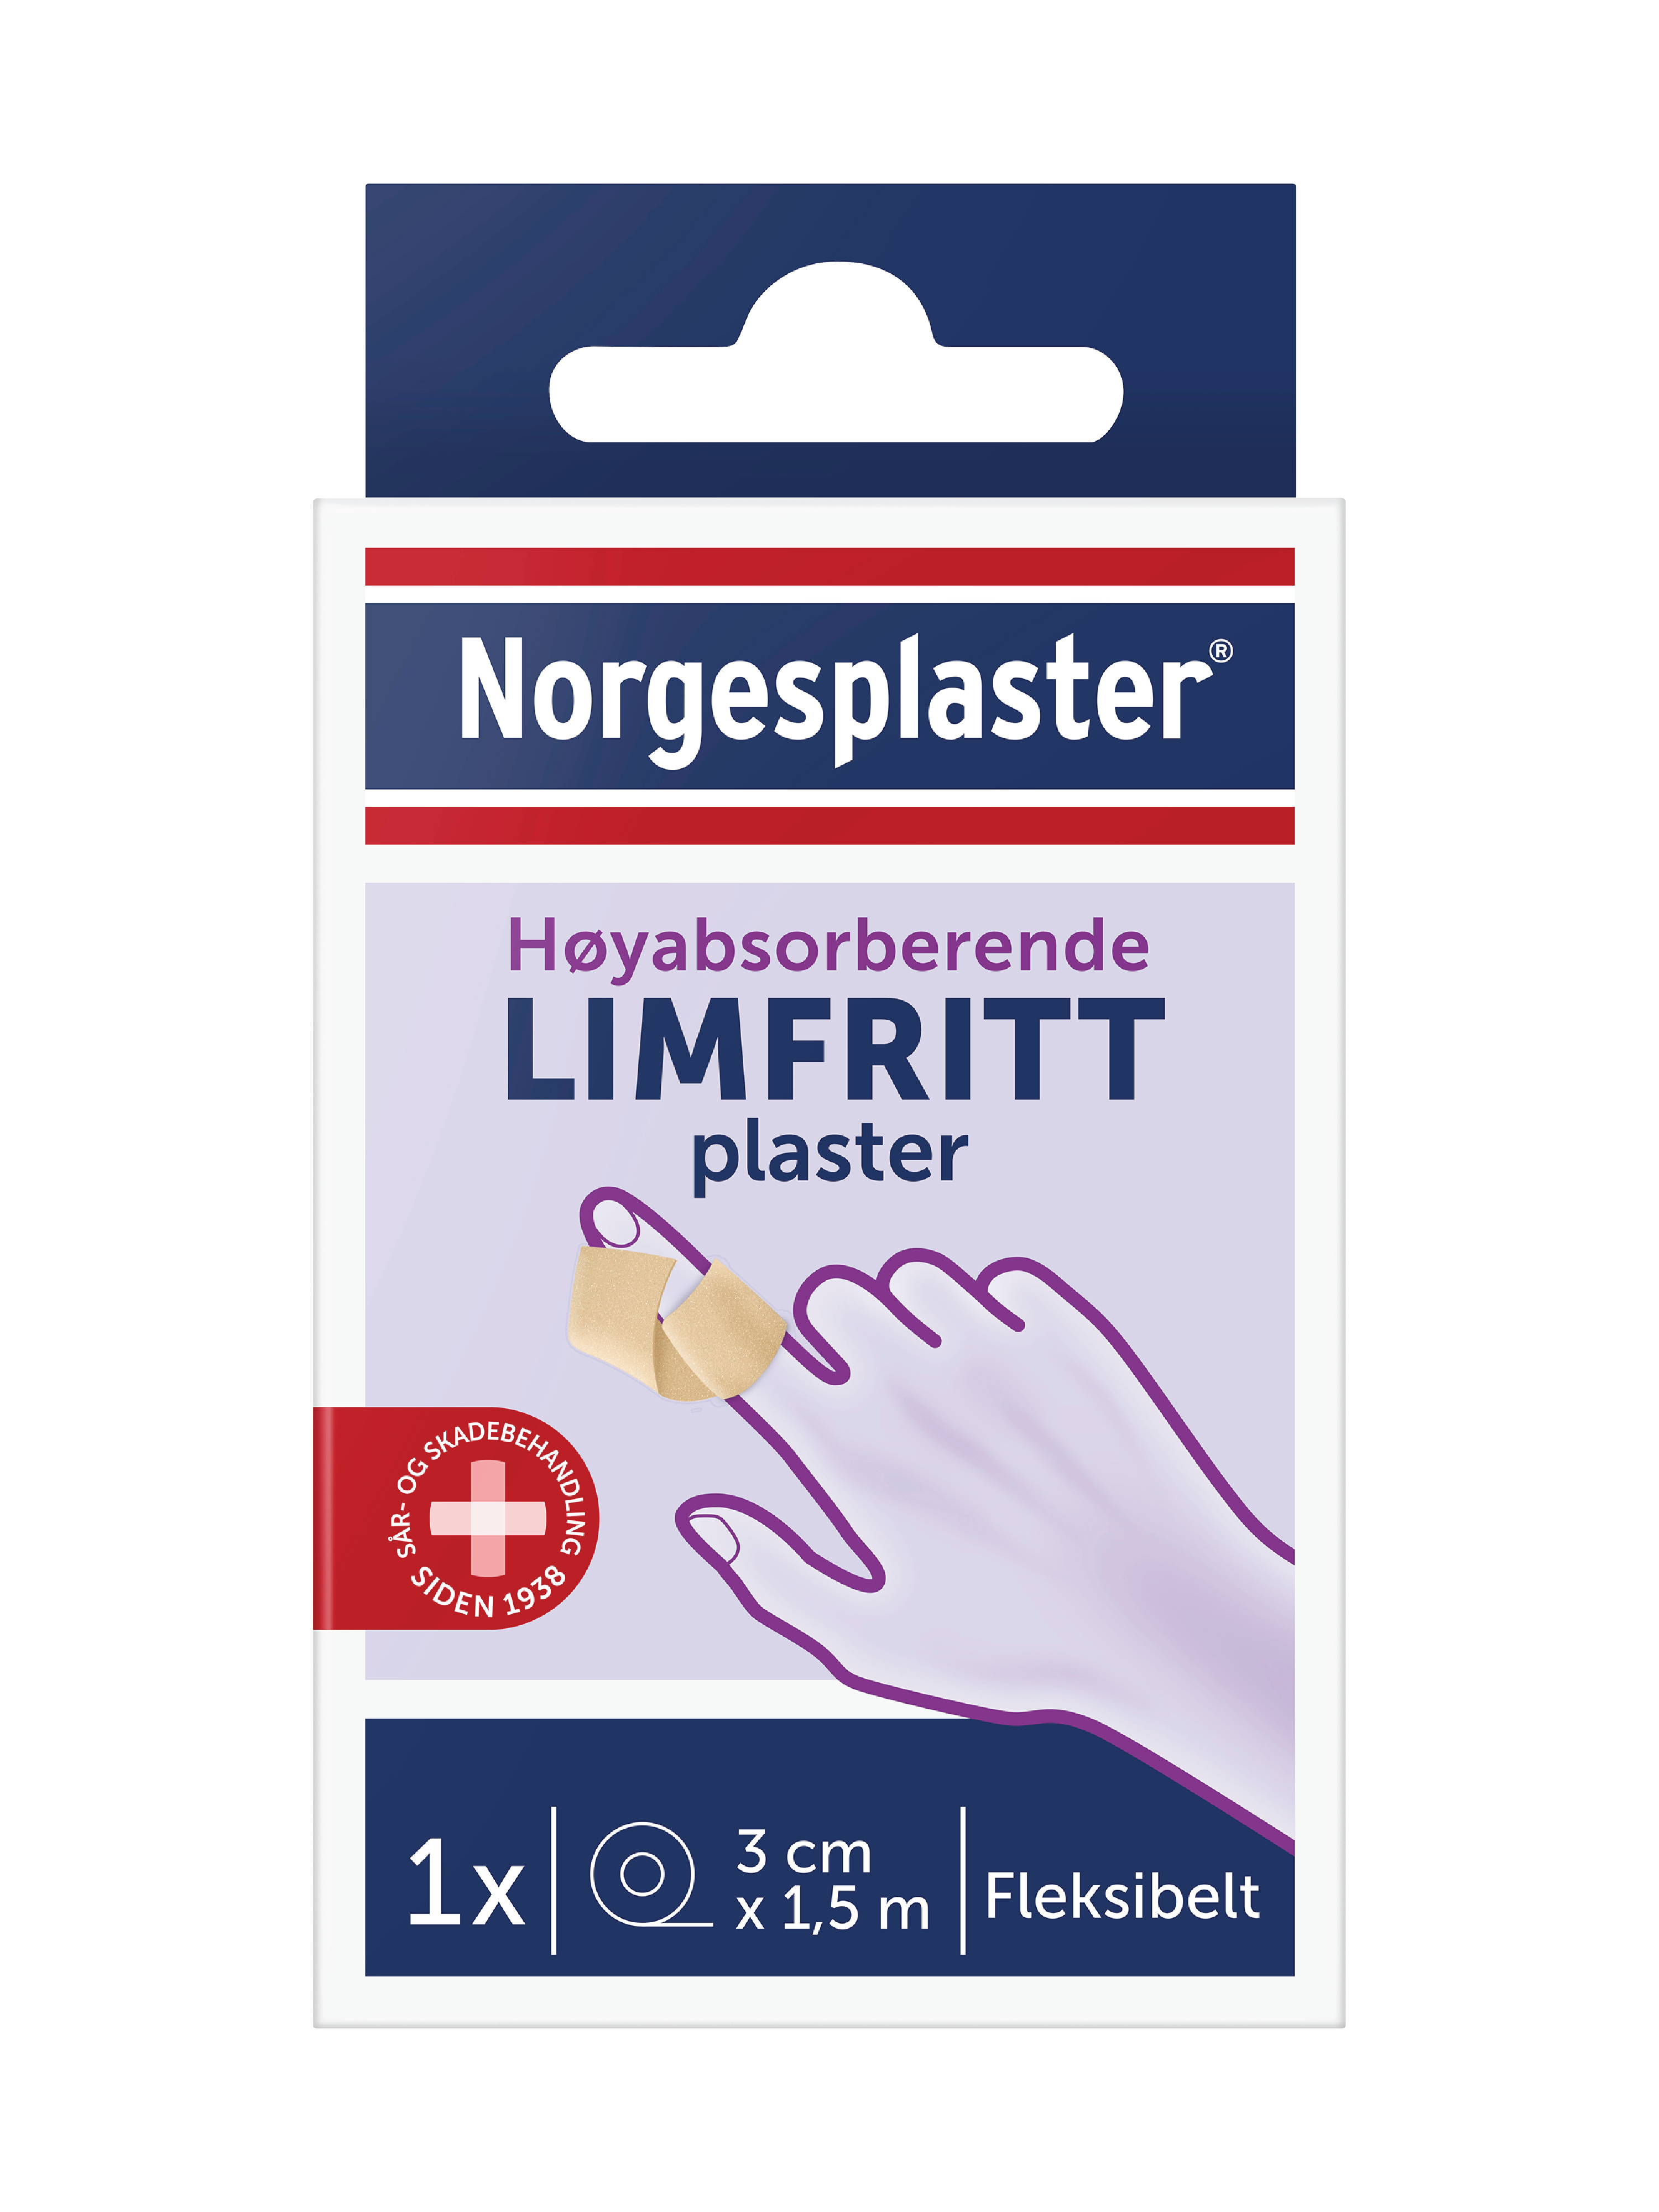 Norgesplaster Limfritt plaster, 3 cm x 1,5 m, 1 stk.